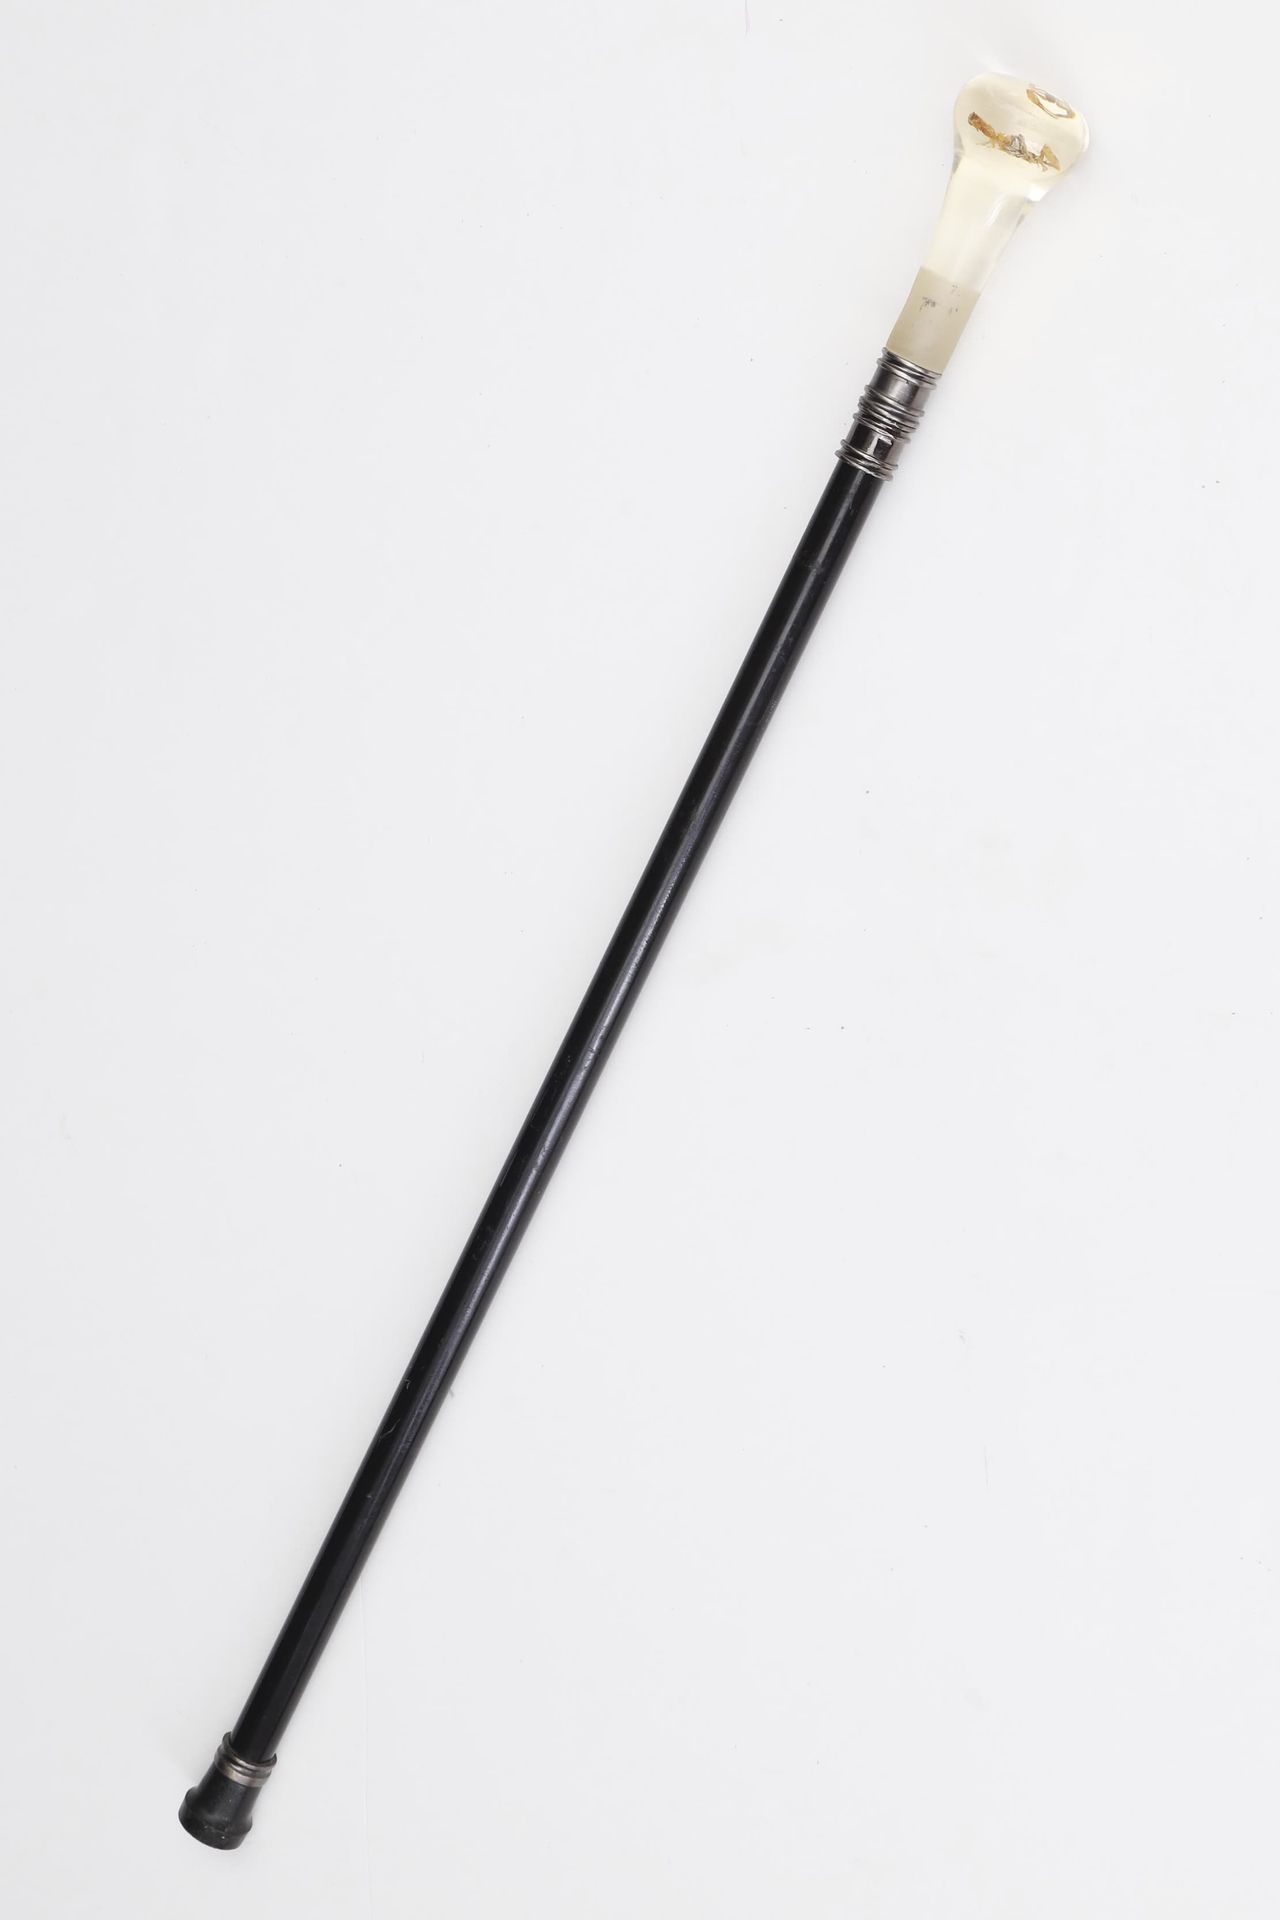 Null 手杖，约 1970 年 树脂玻璃钮环绕蝎子，黑漆金属杖杆
 高 86.5 厘米